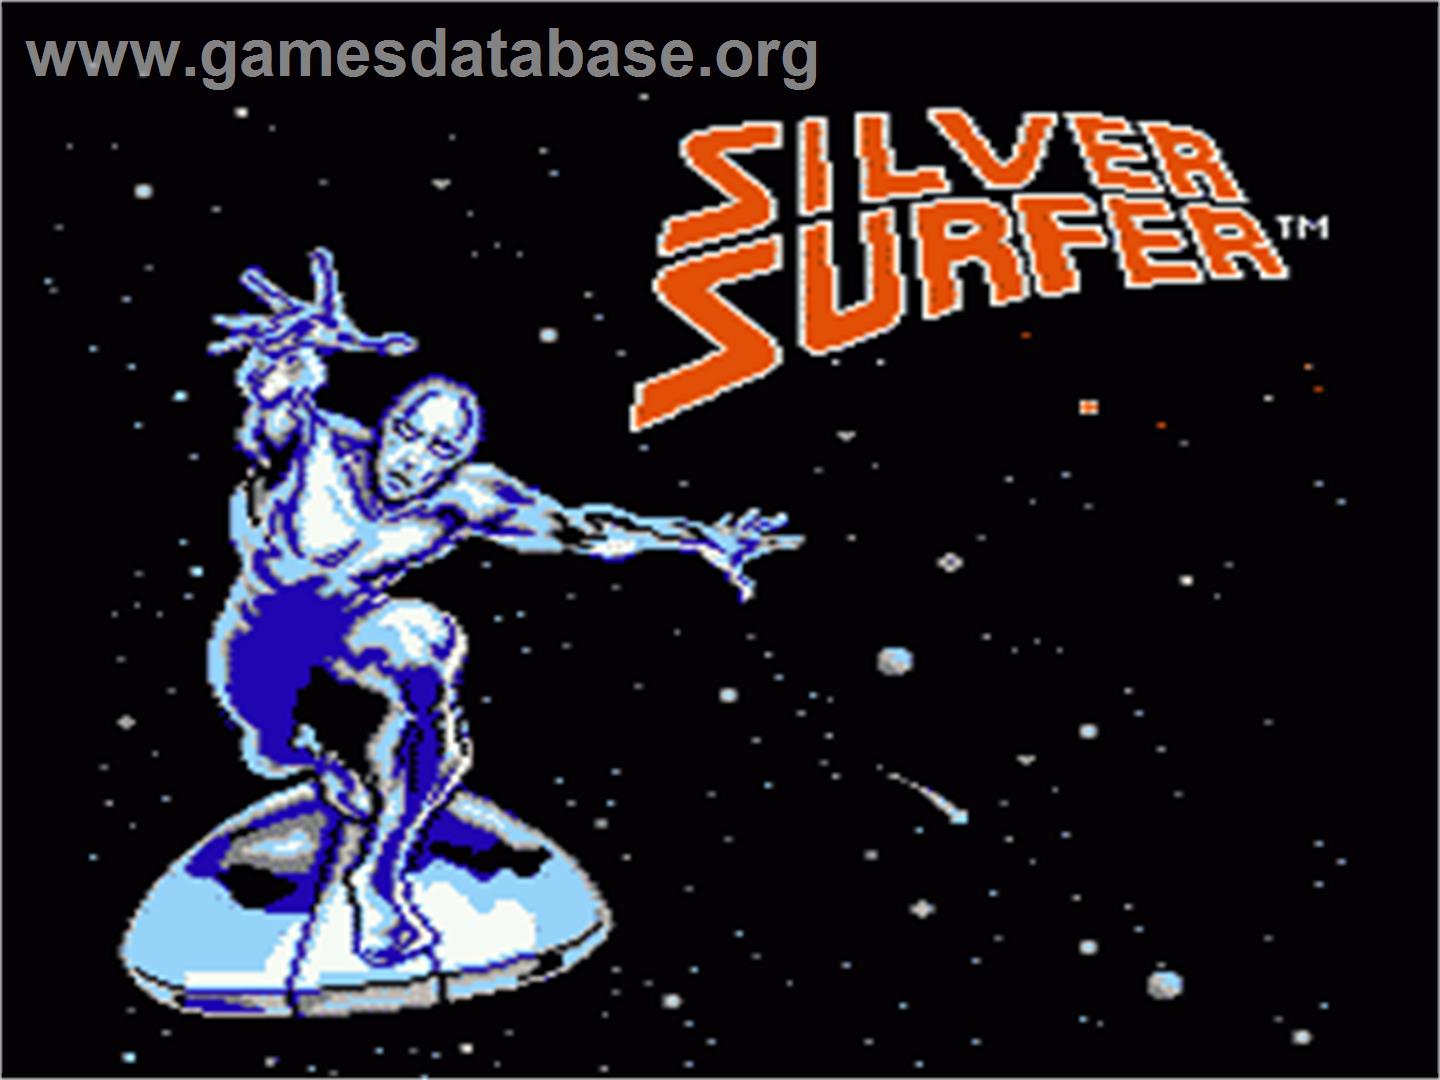 Silver Surfer - Nintendo NES - Artwork - Title Screen